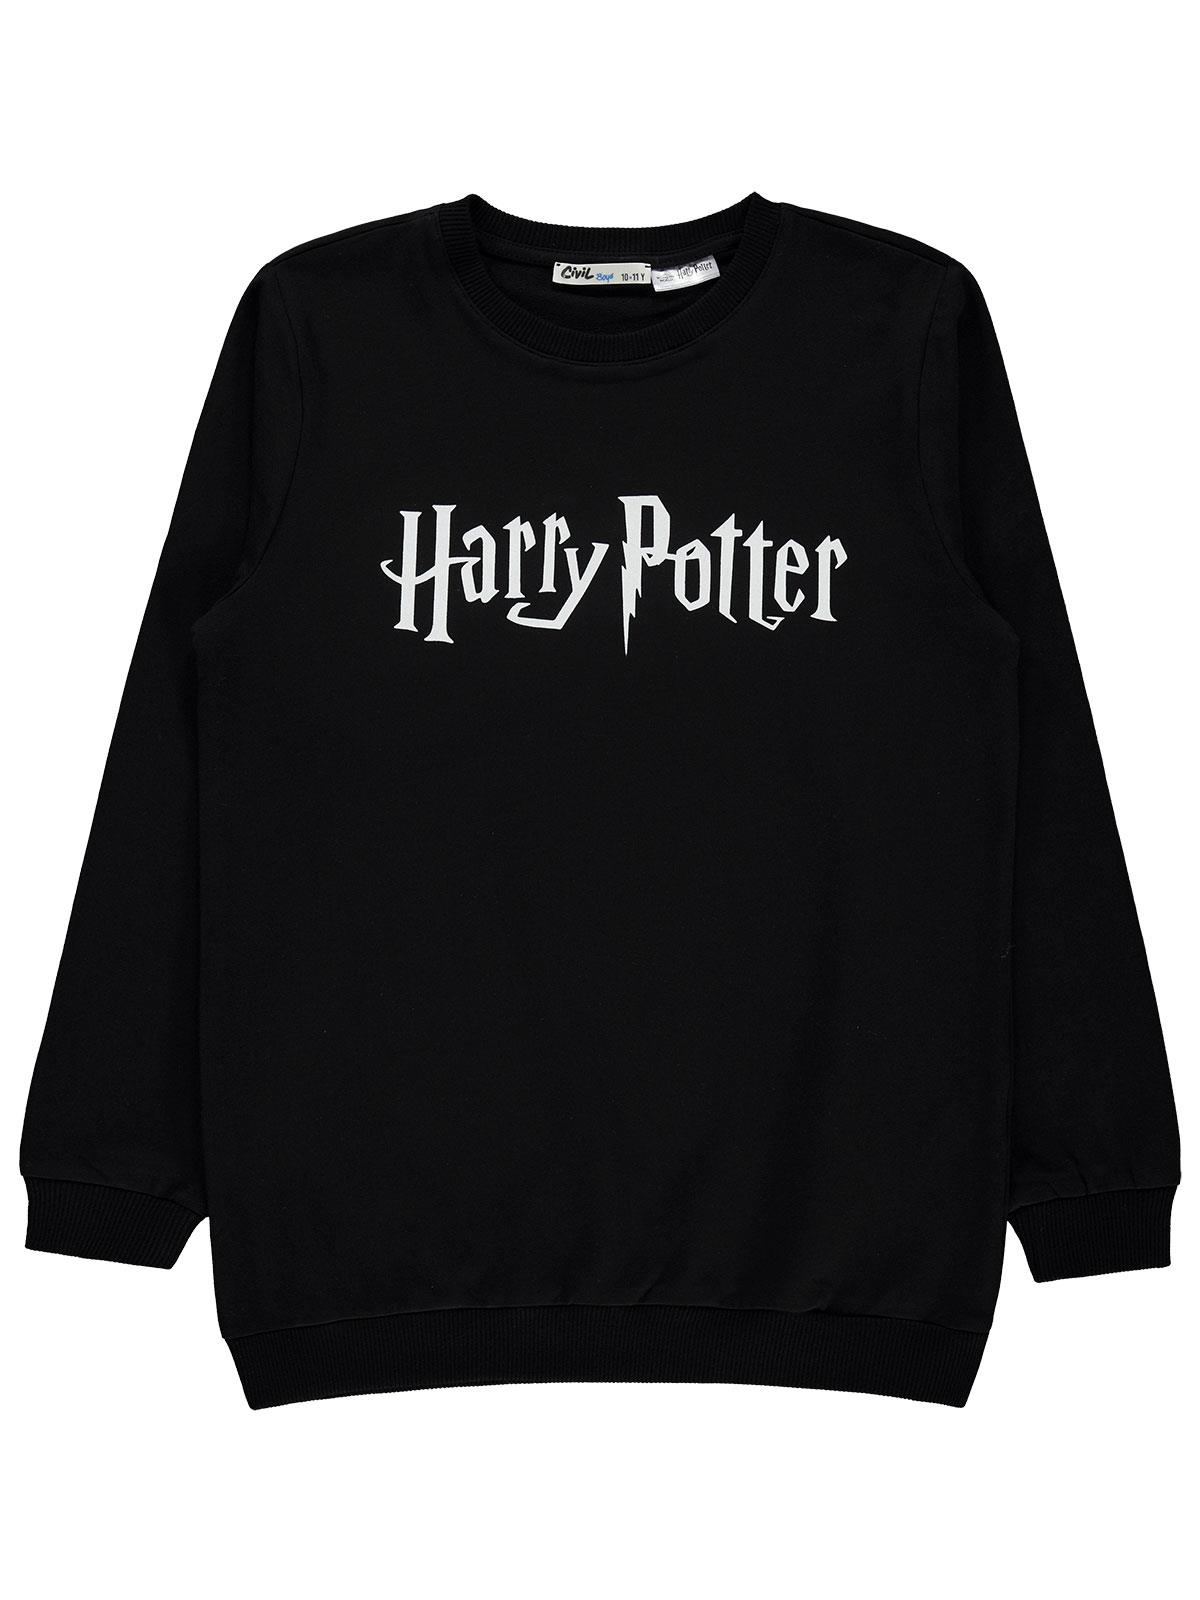 Harry Potter Erkek Çocuk Sweatshirt 10-13 Yaş Siyah